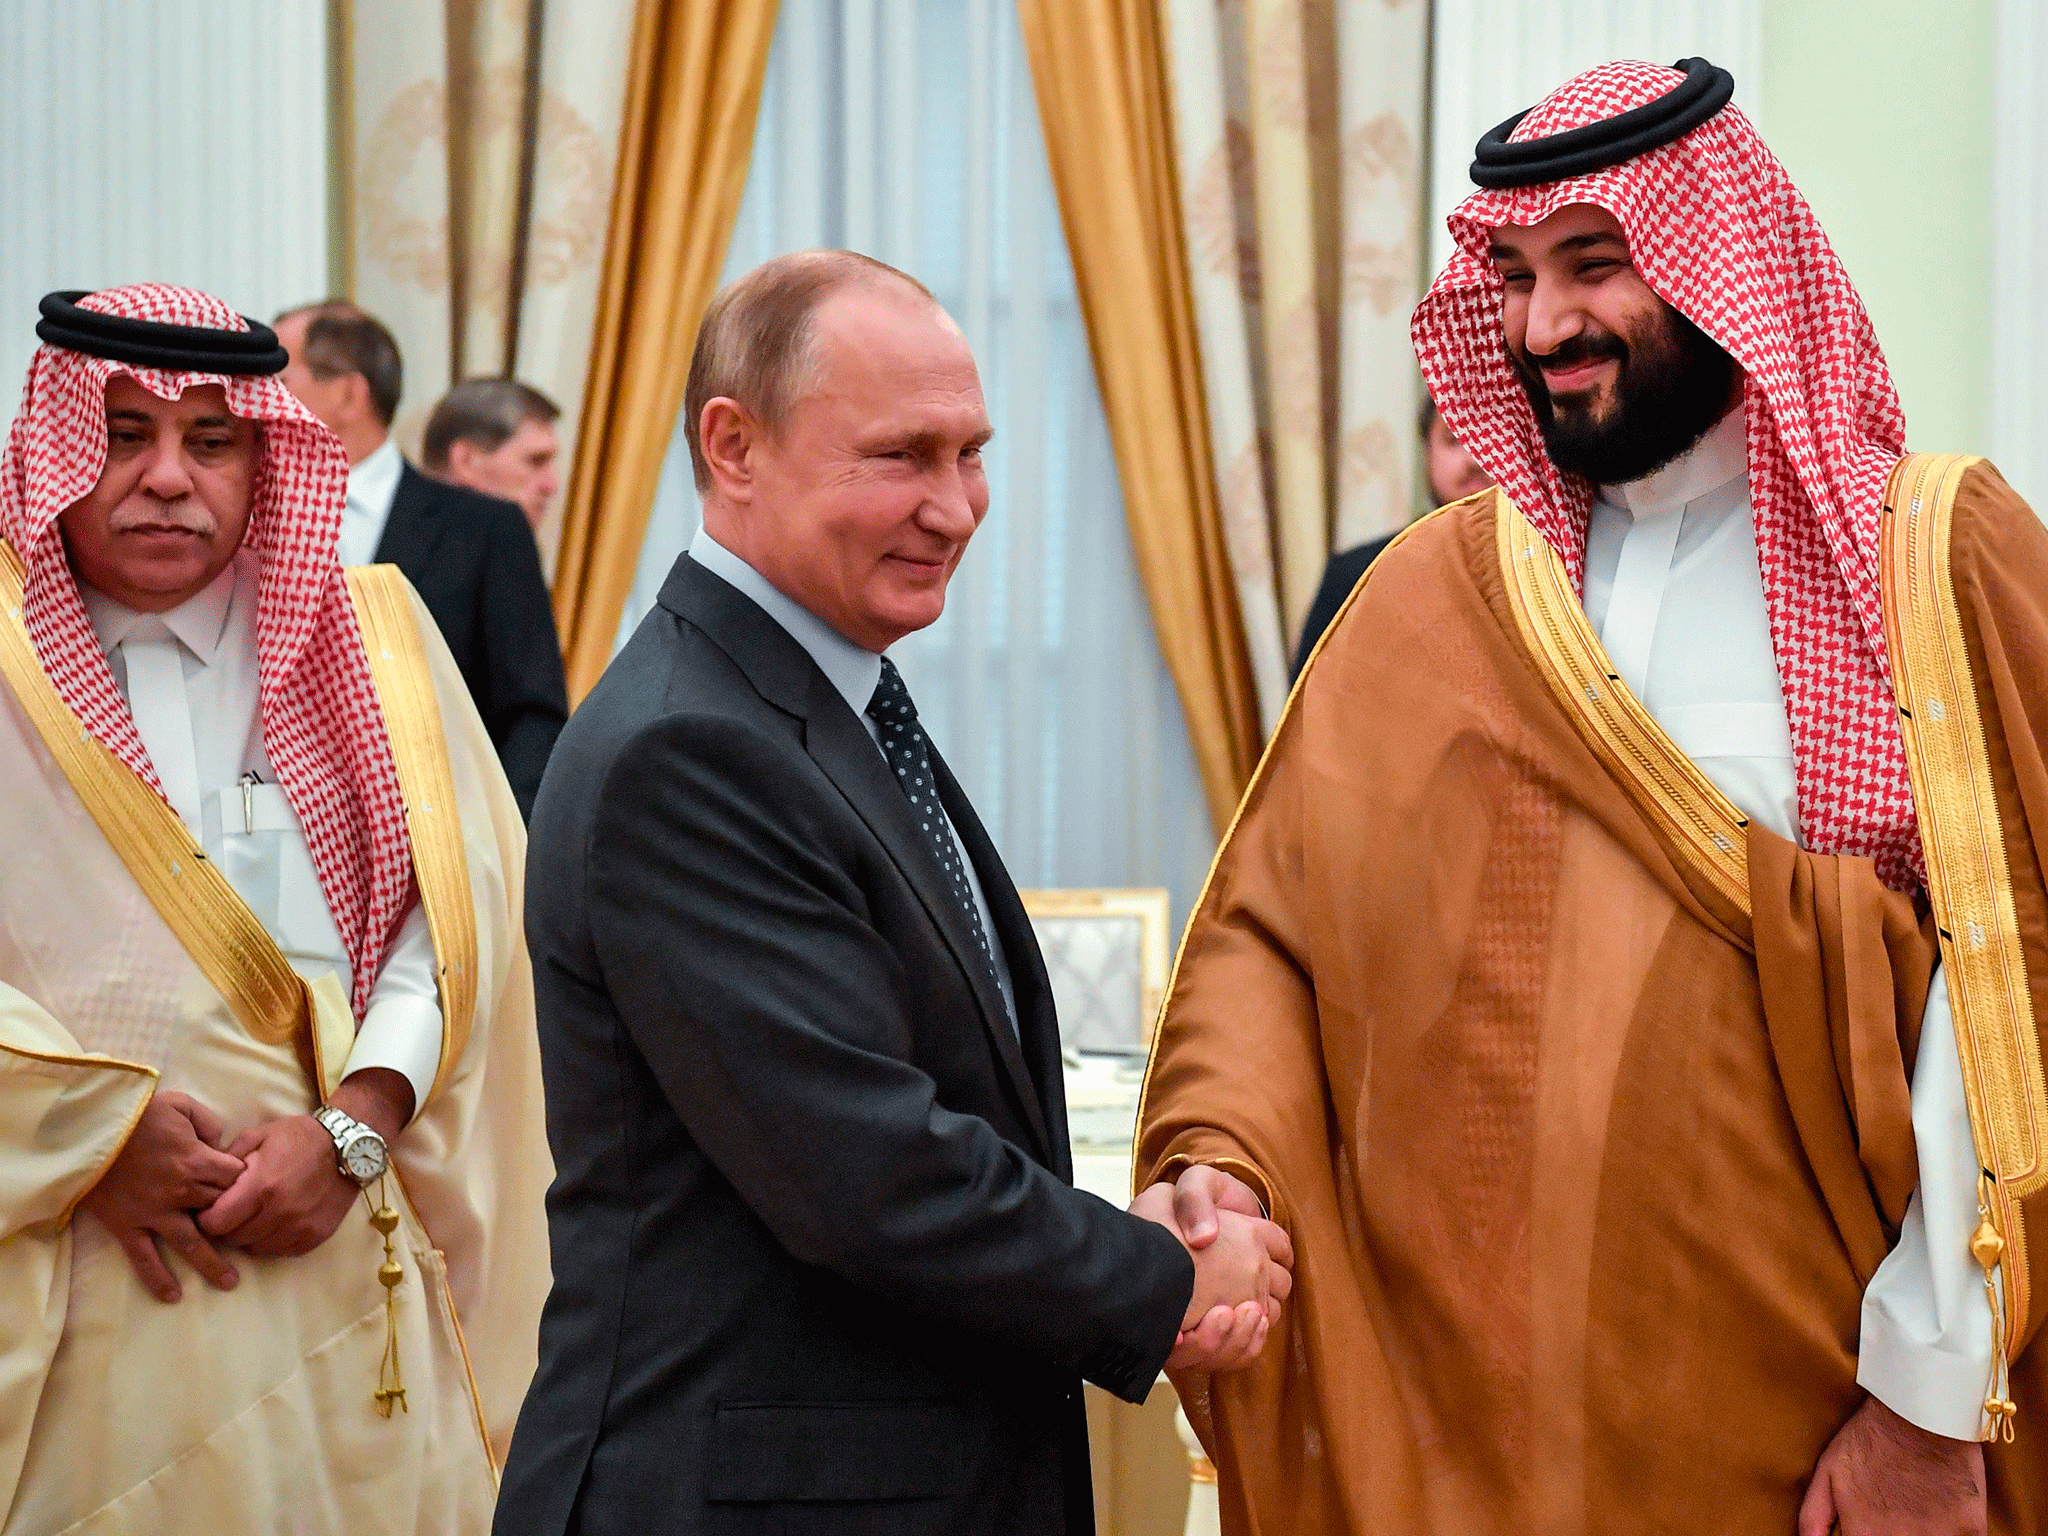 Russian president Vladimir Putin shakes hands with Saudi Crown Prince Mohammed bin Salman at the Kremlin on Thursday